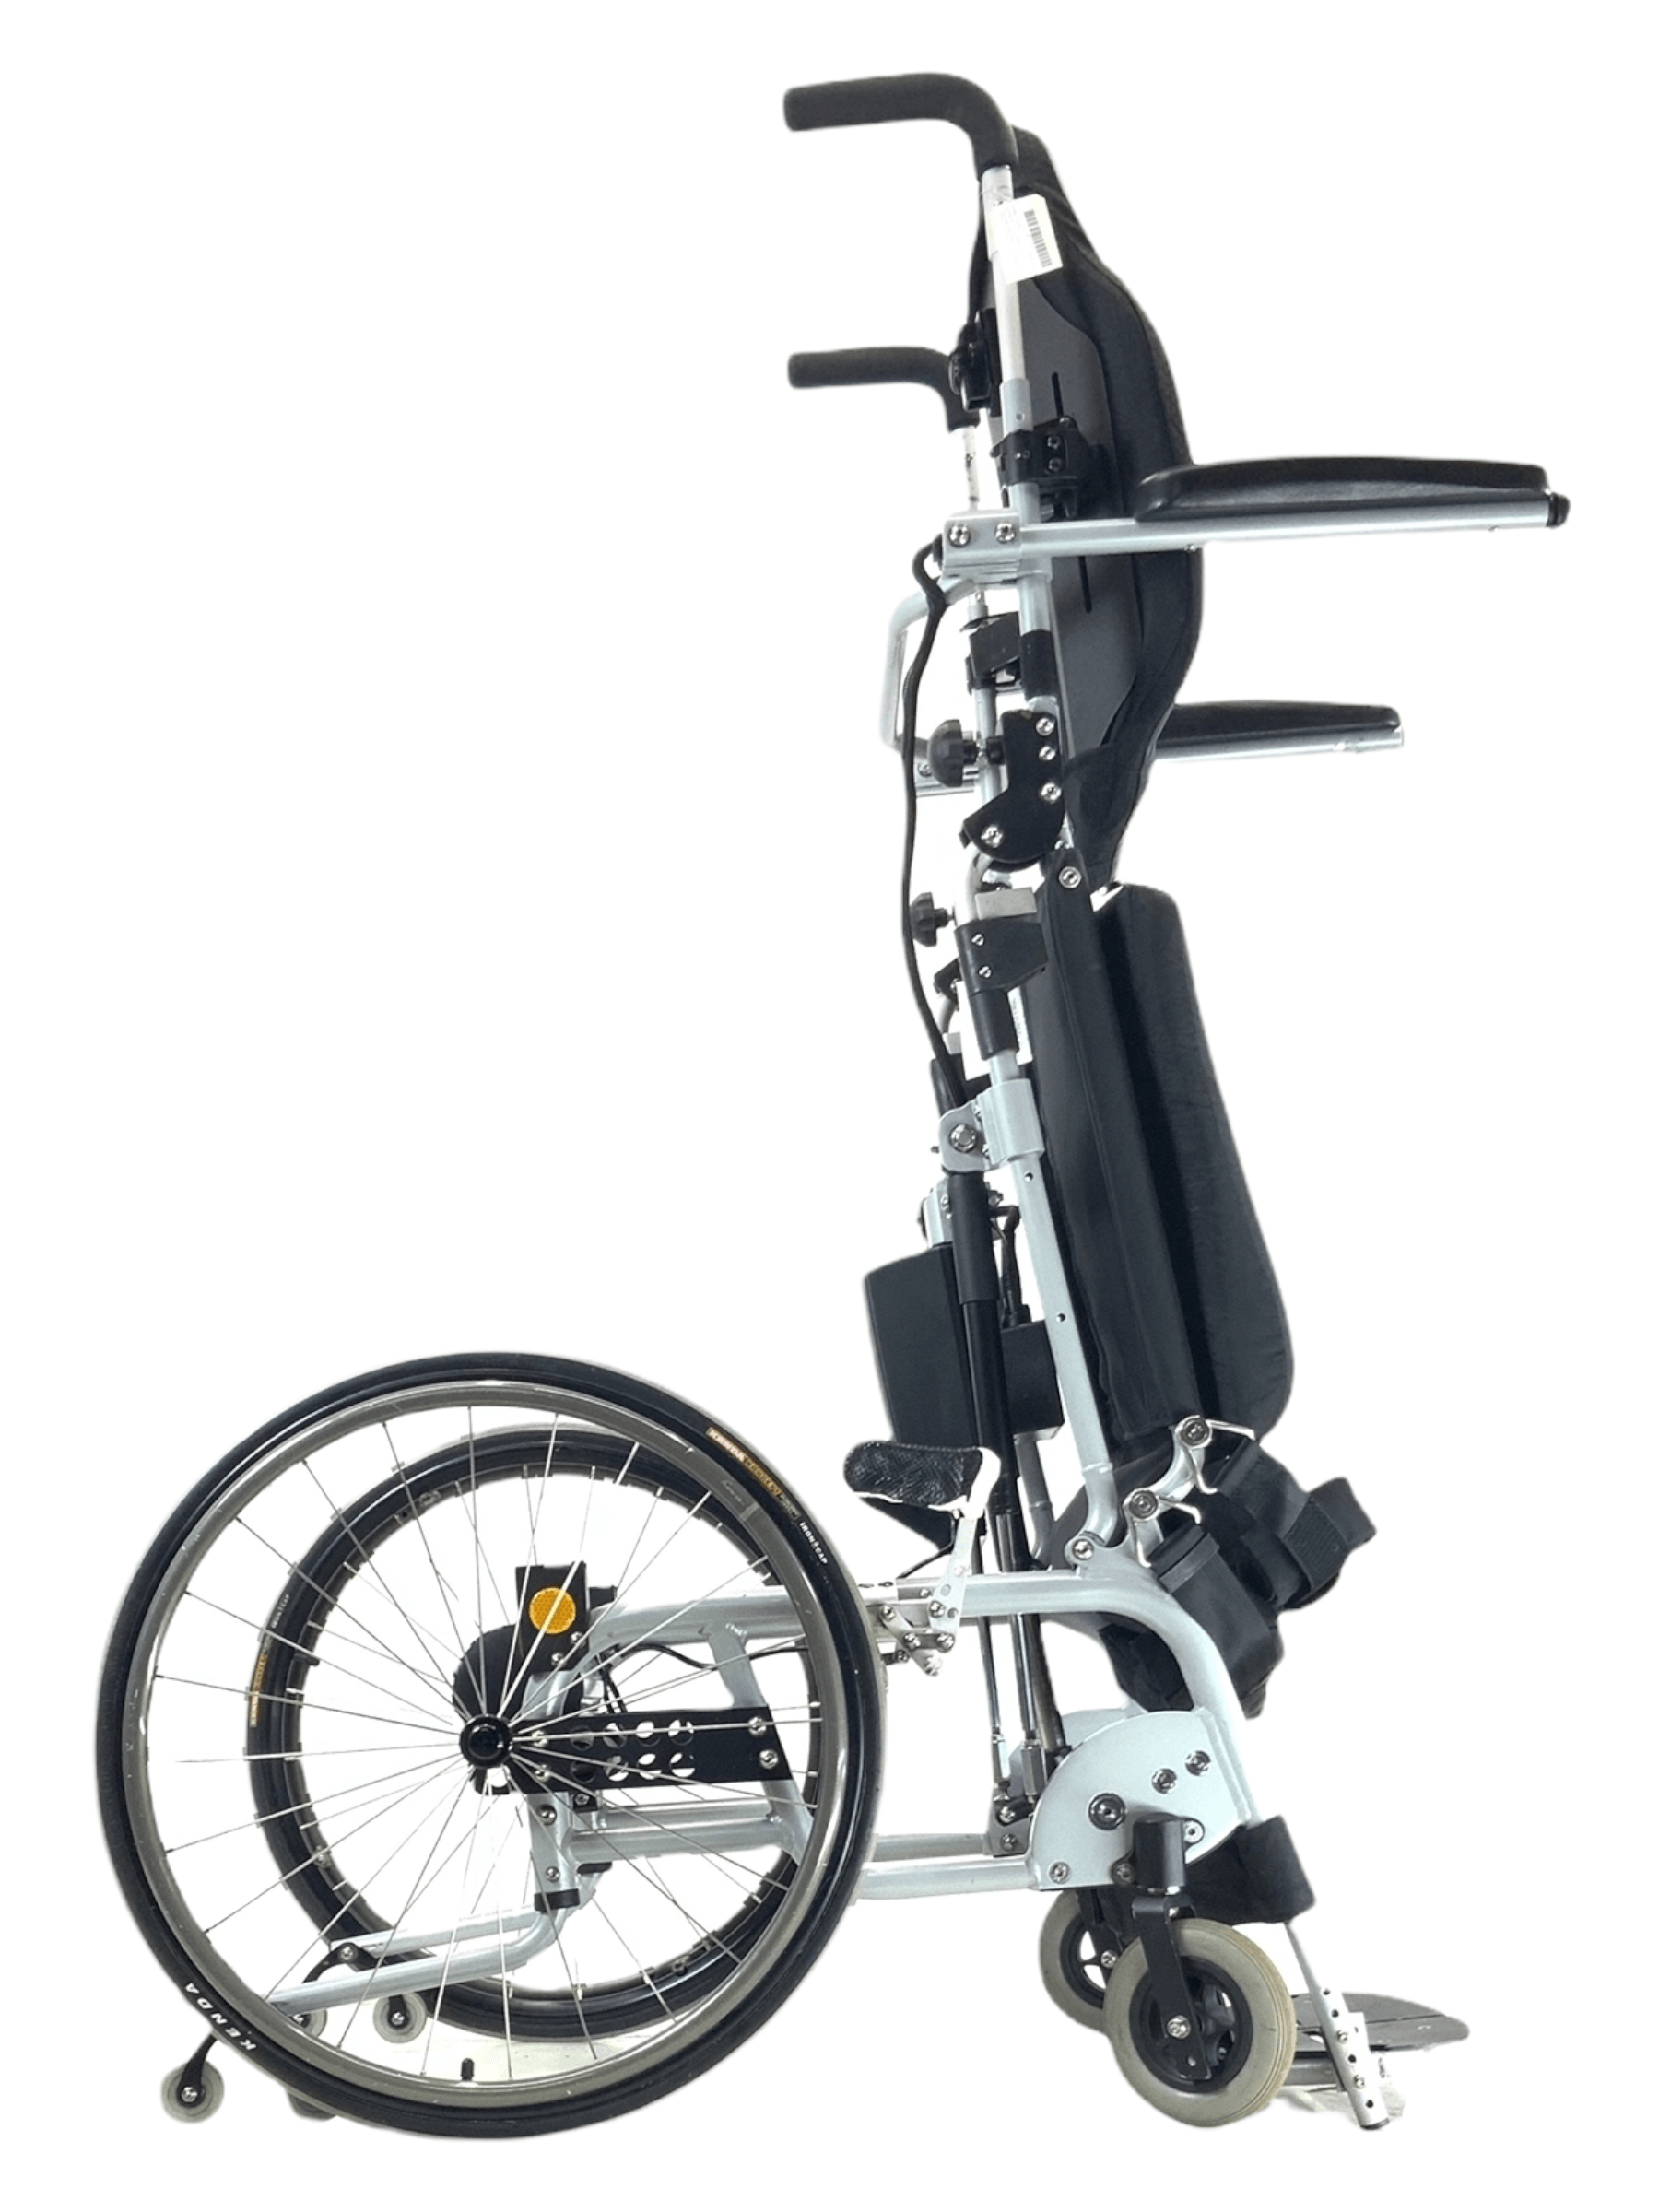 Karman Stand-Up Power Wheelchair